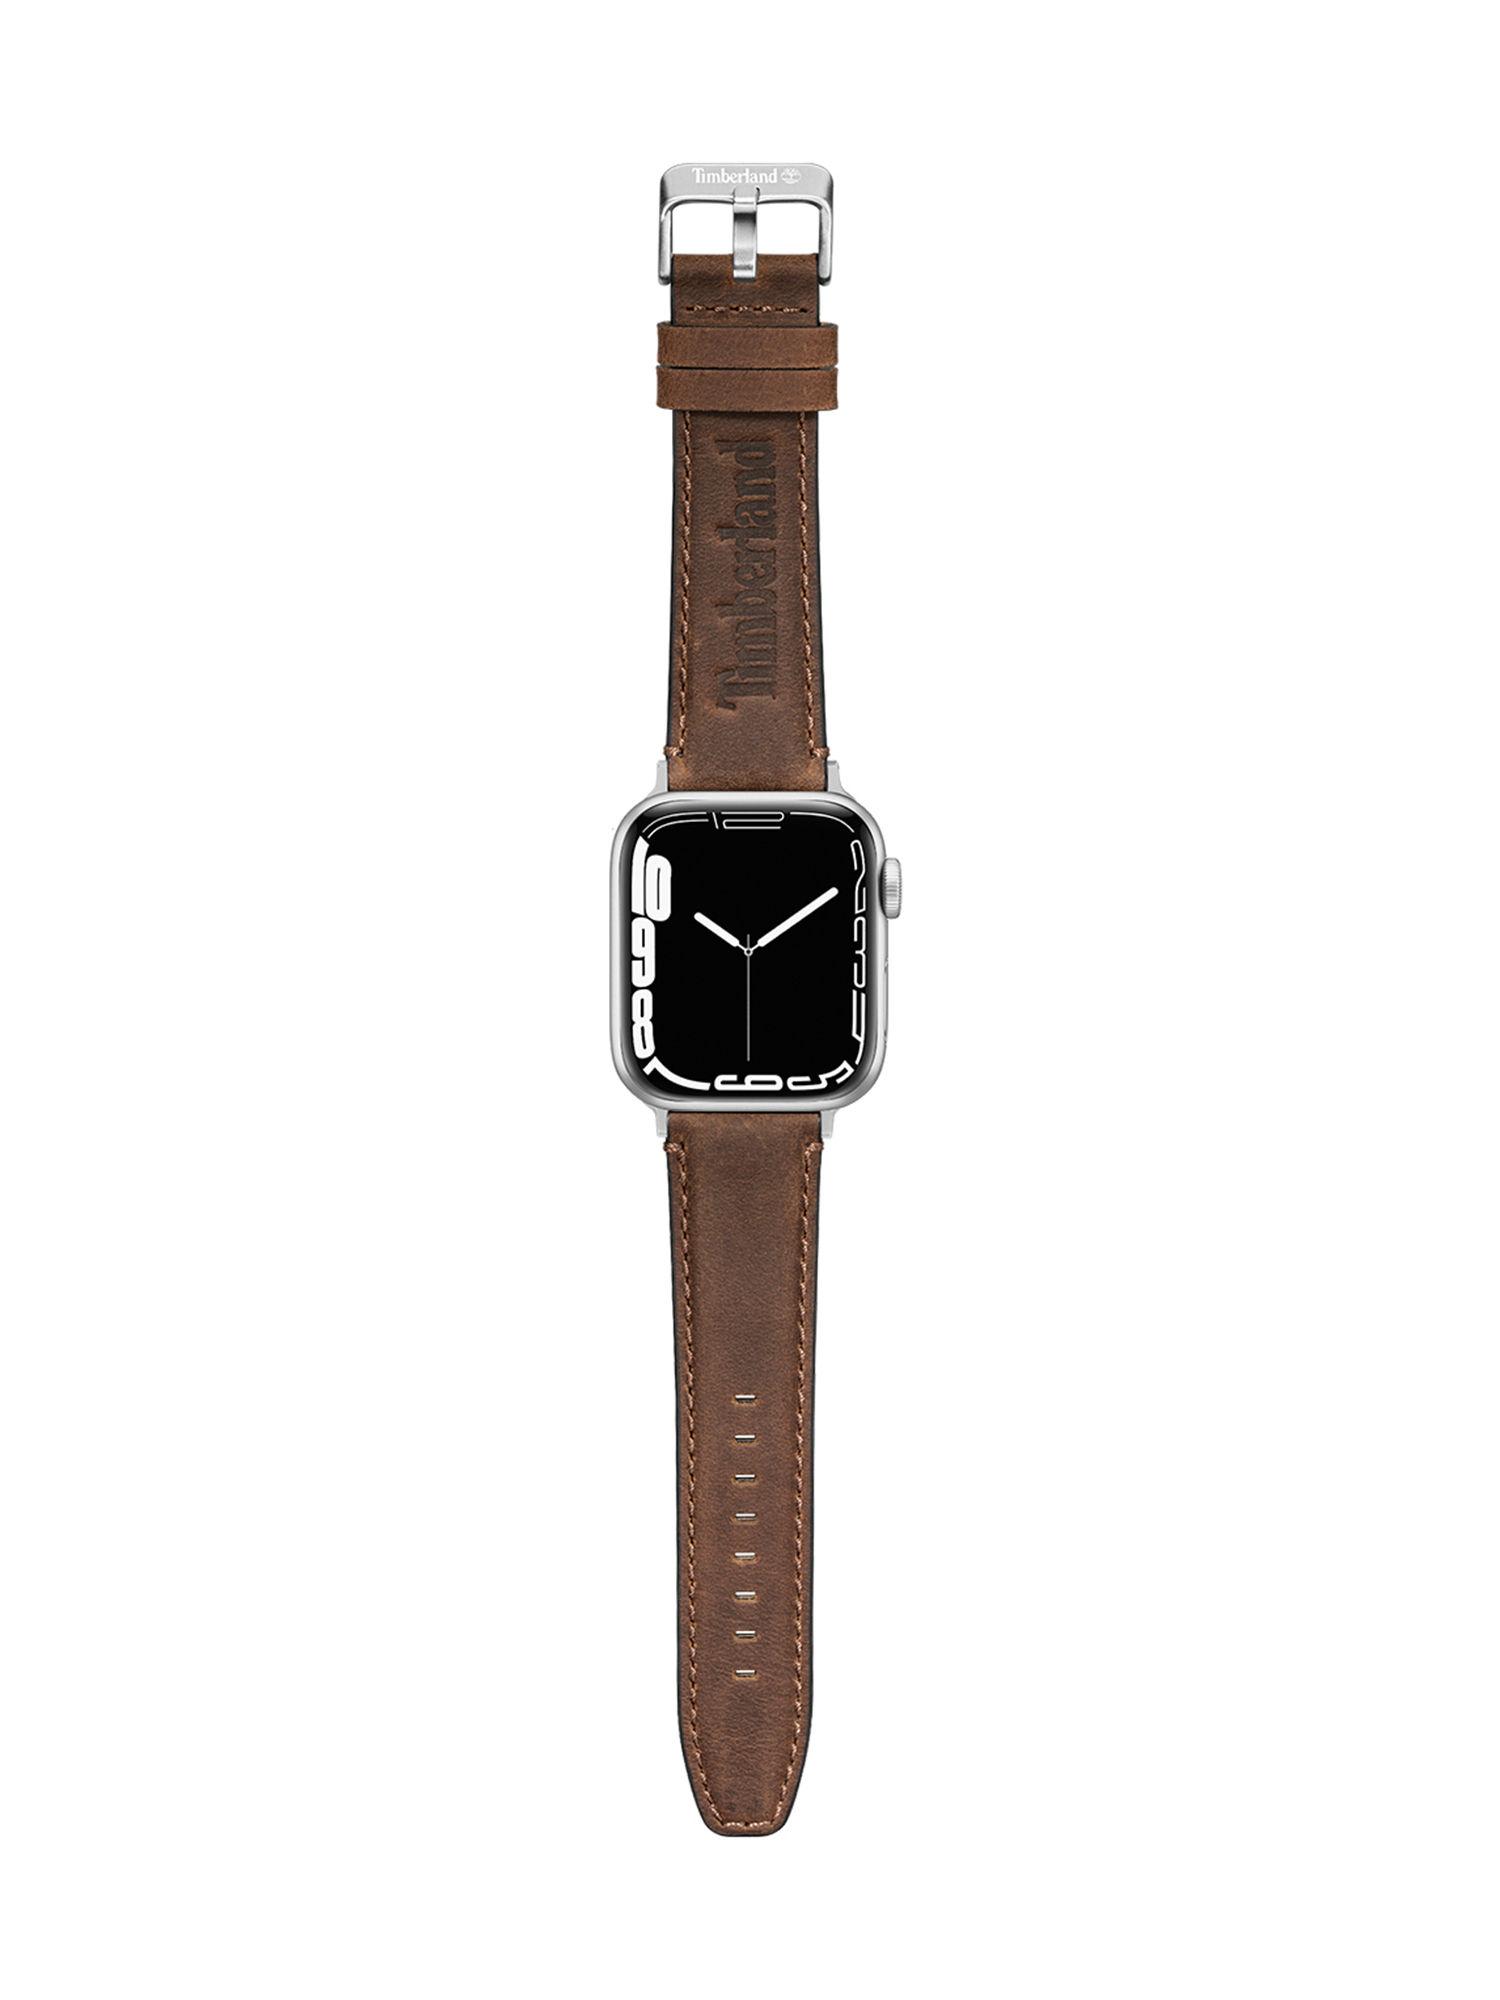 barnesbrook-strap-for-apple/samsung-smart-watch-20mm-brown-color-leather---tdoul0000703